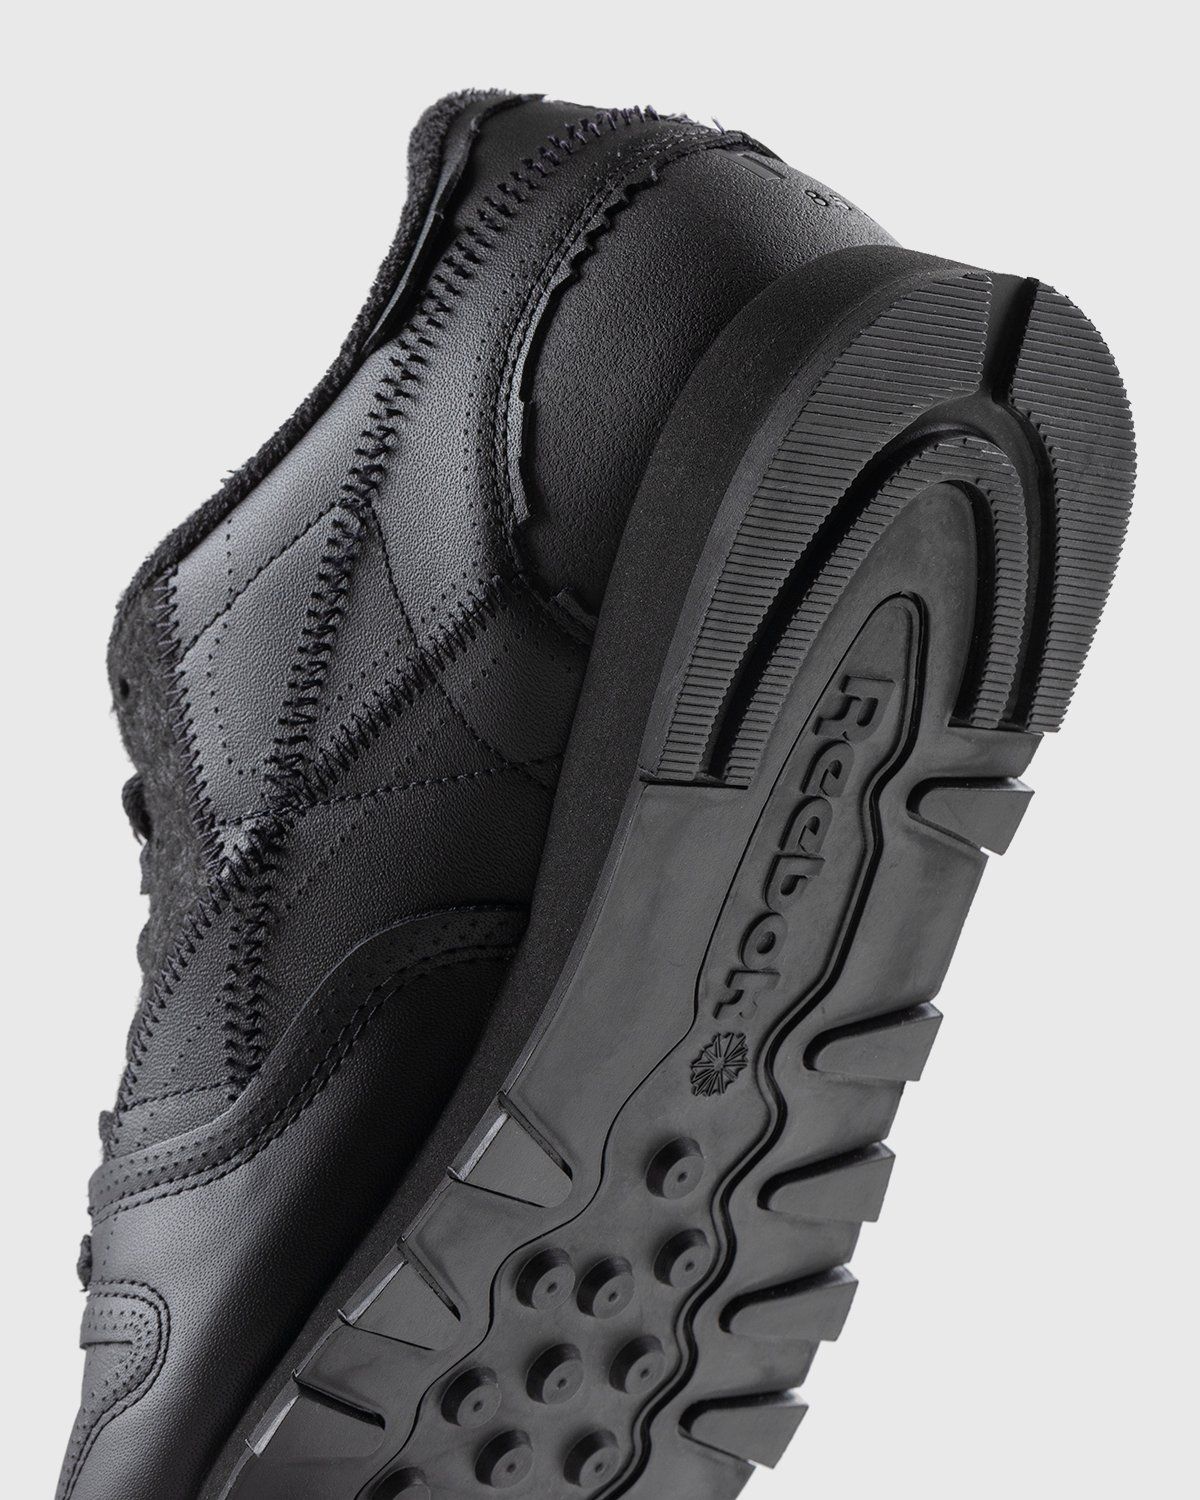 Maison Margiela x Reebok – Classic Leather Memory Of Black/Footwear White/Black - Low Top Sneakers - Black - Image 6